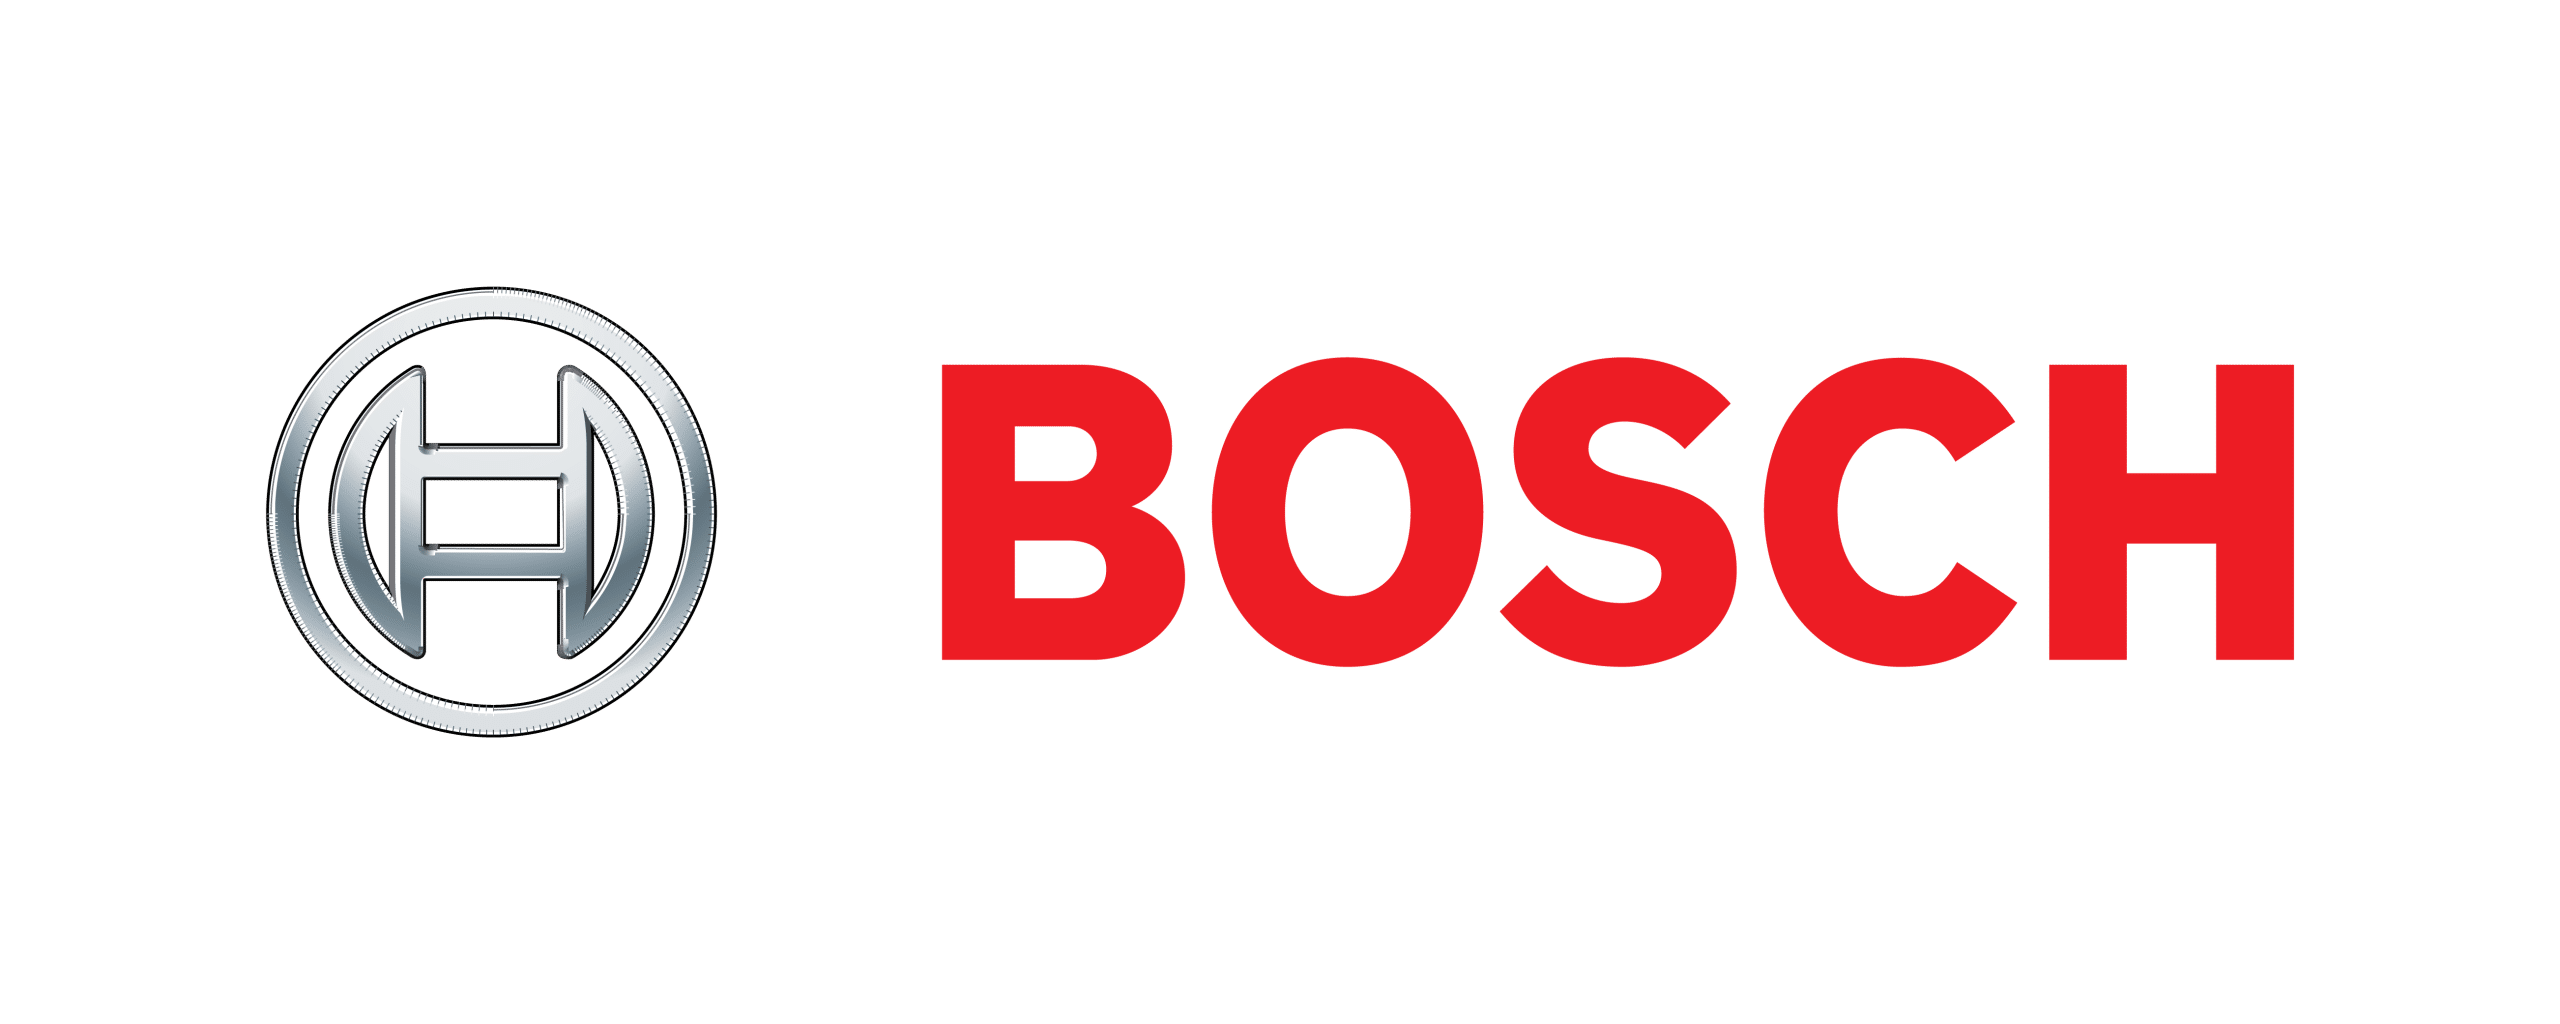 bosch home logo